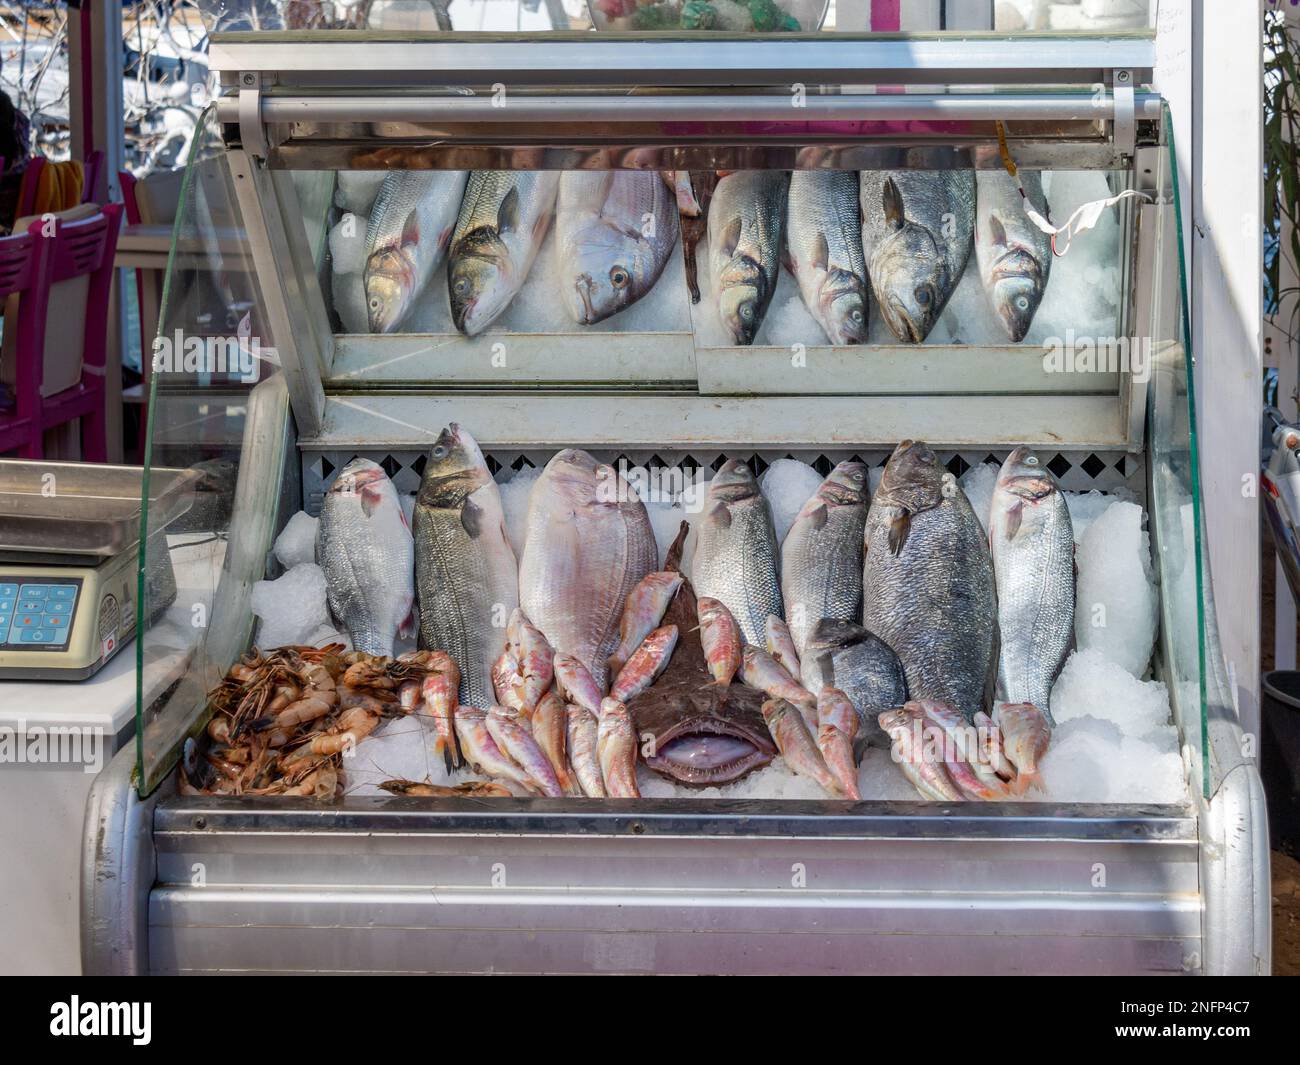 fish on ice in display cabinetGumusluk Stock Photo